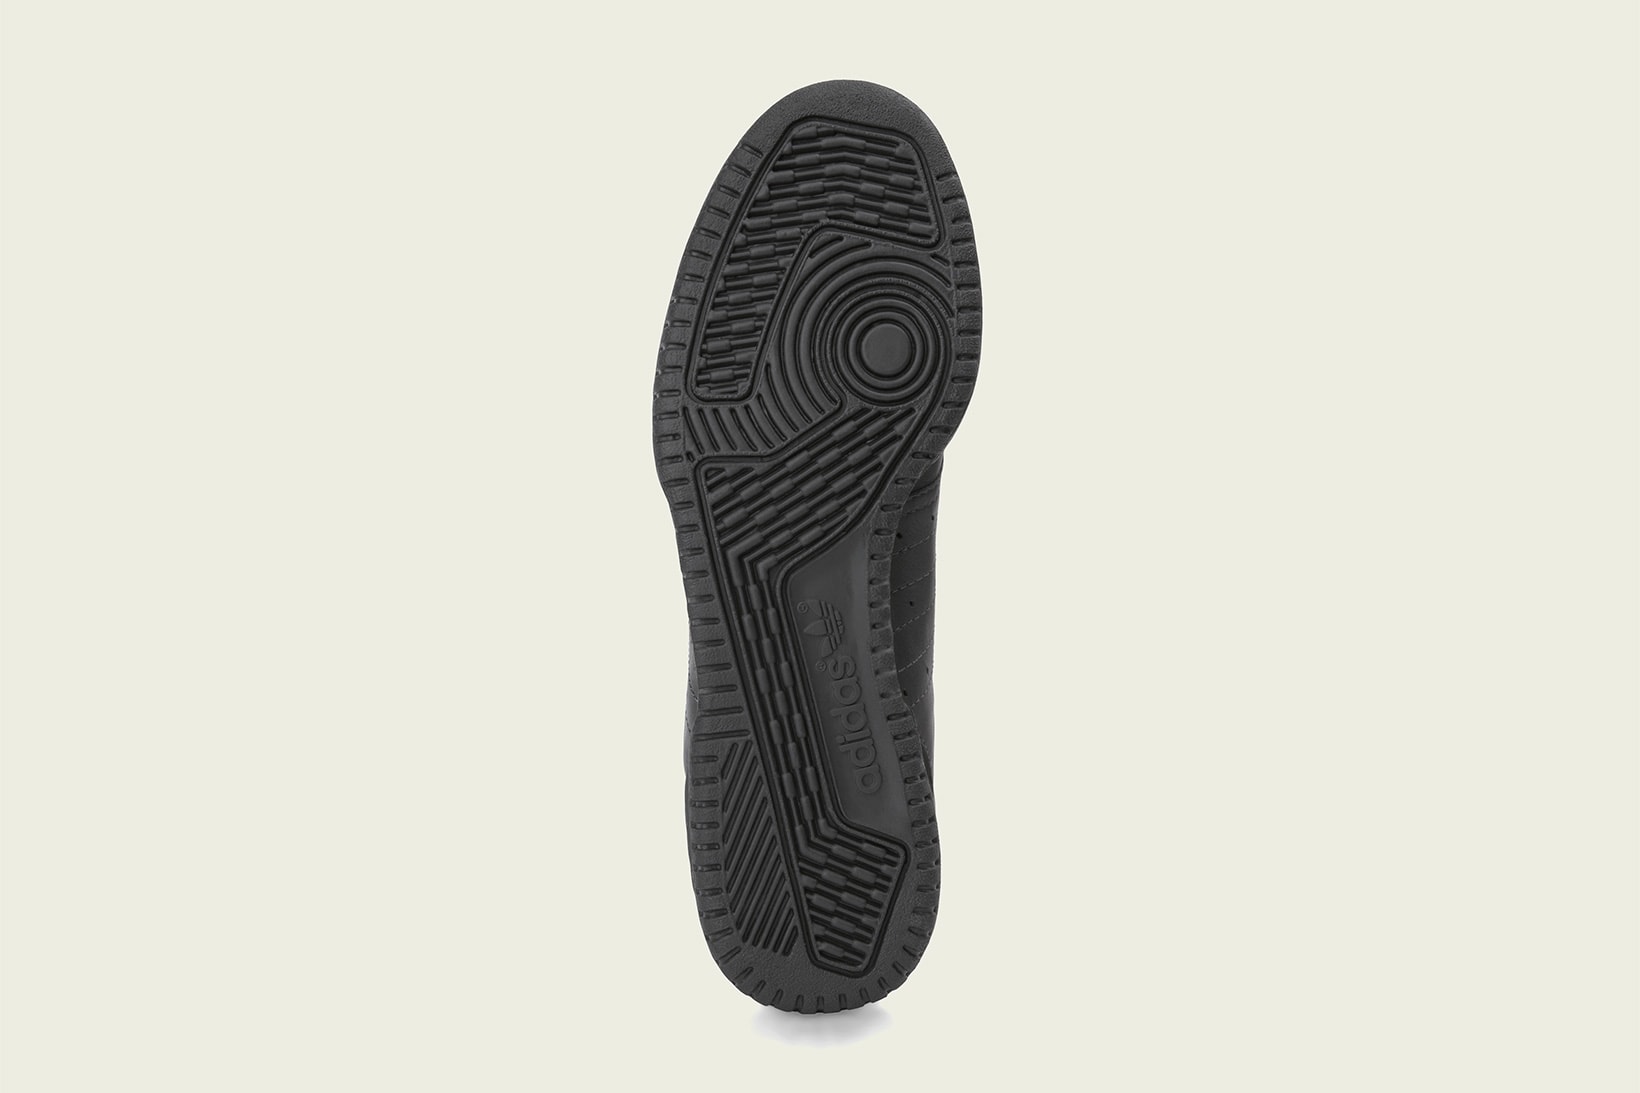 adidas YEEZY Powerphase Core Black Kanye West footwear release dates march 2018